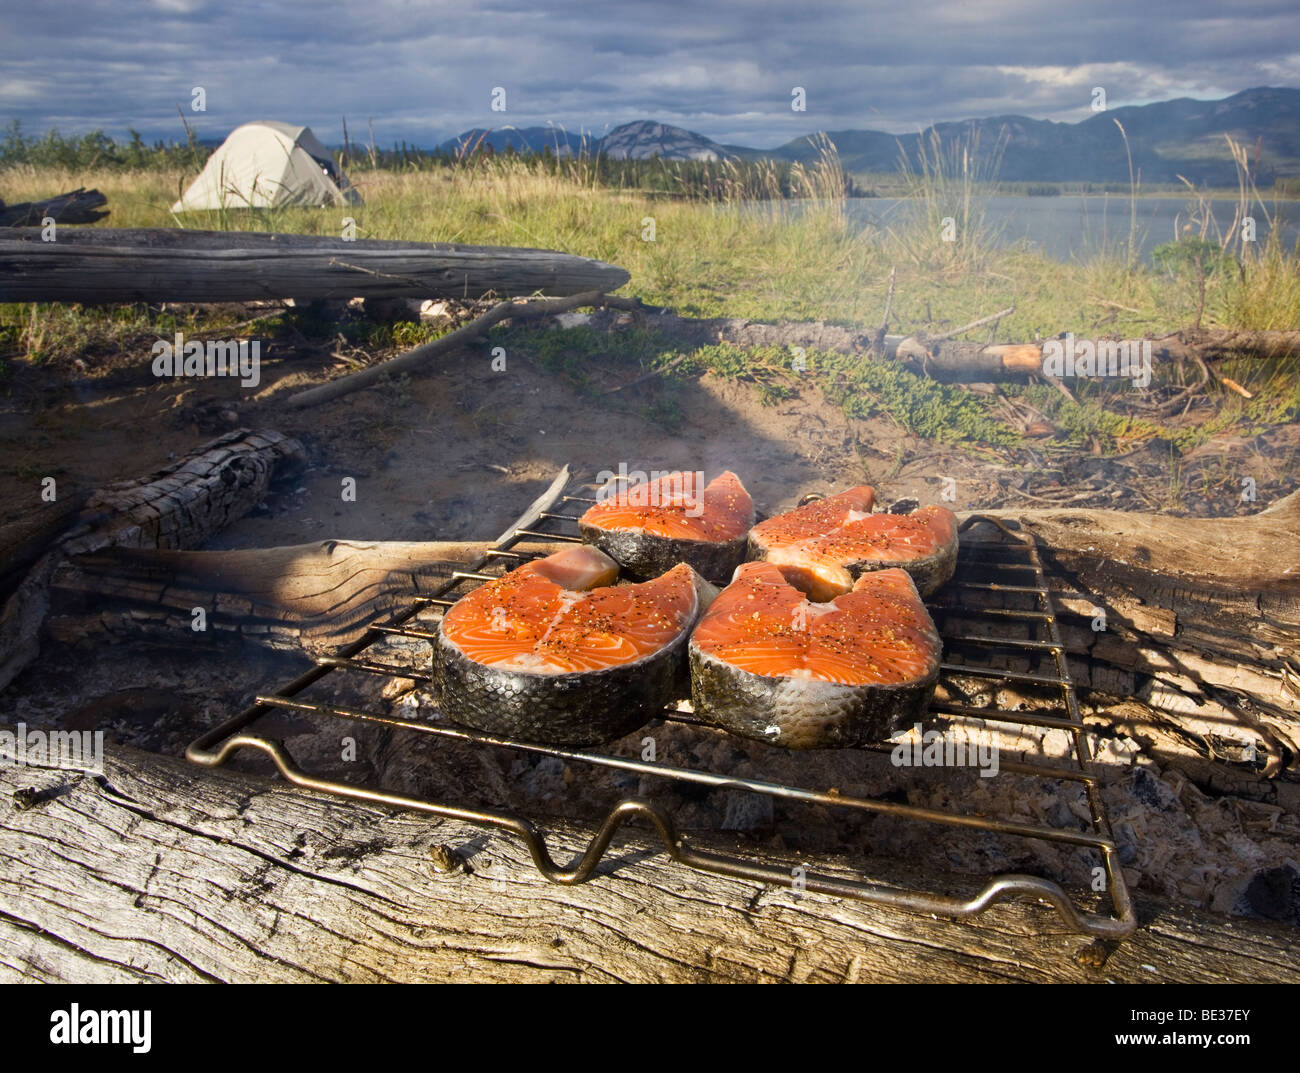 camping barbecue steak artoon